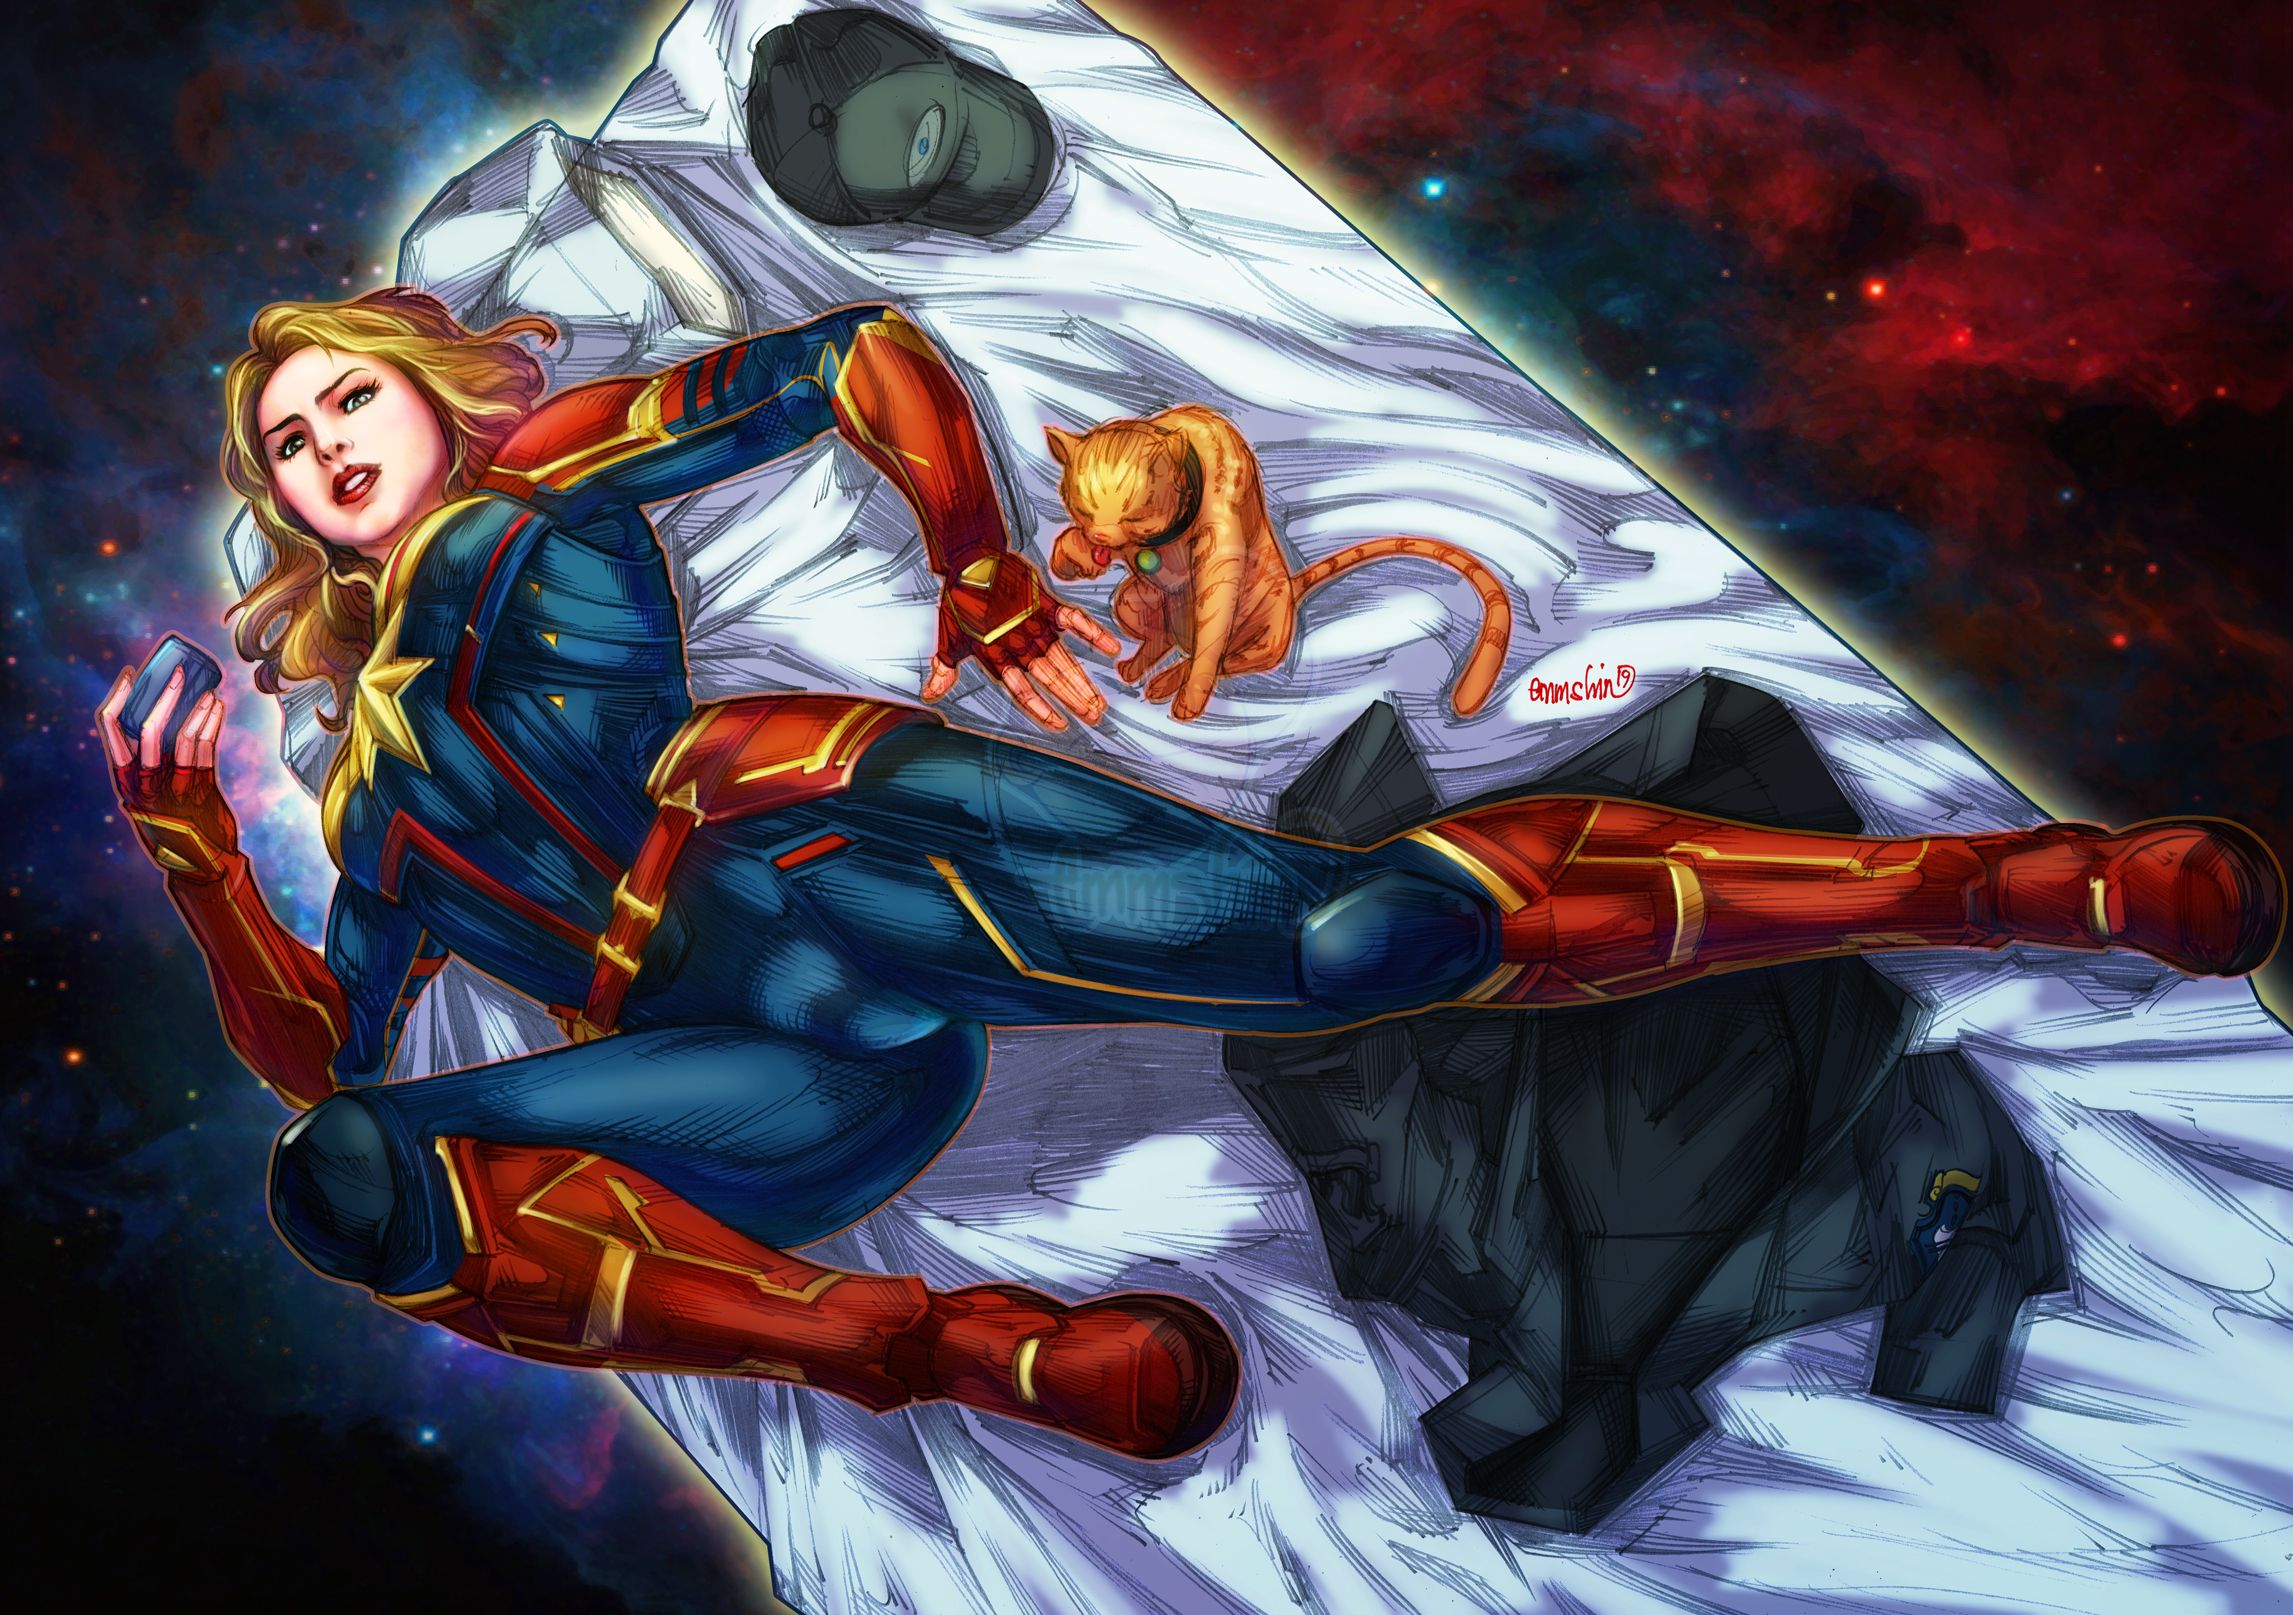 Captain Marvel Fanart, HD Superheroes, 4k Wallpapers, Image, Backgrounds, P...